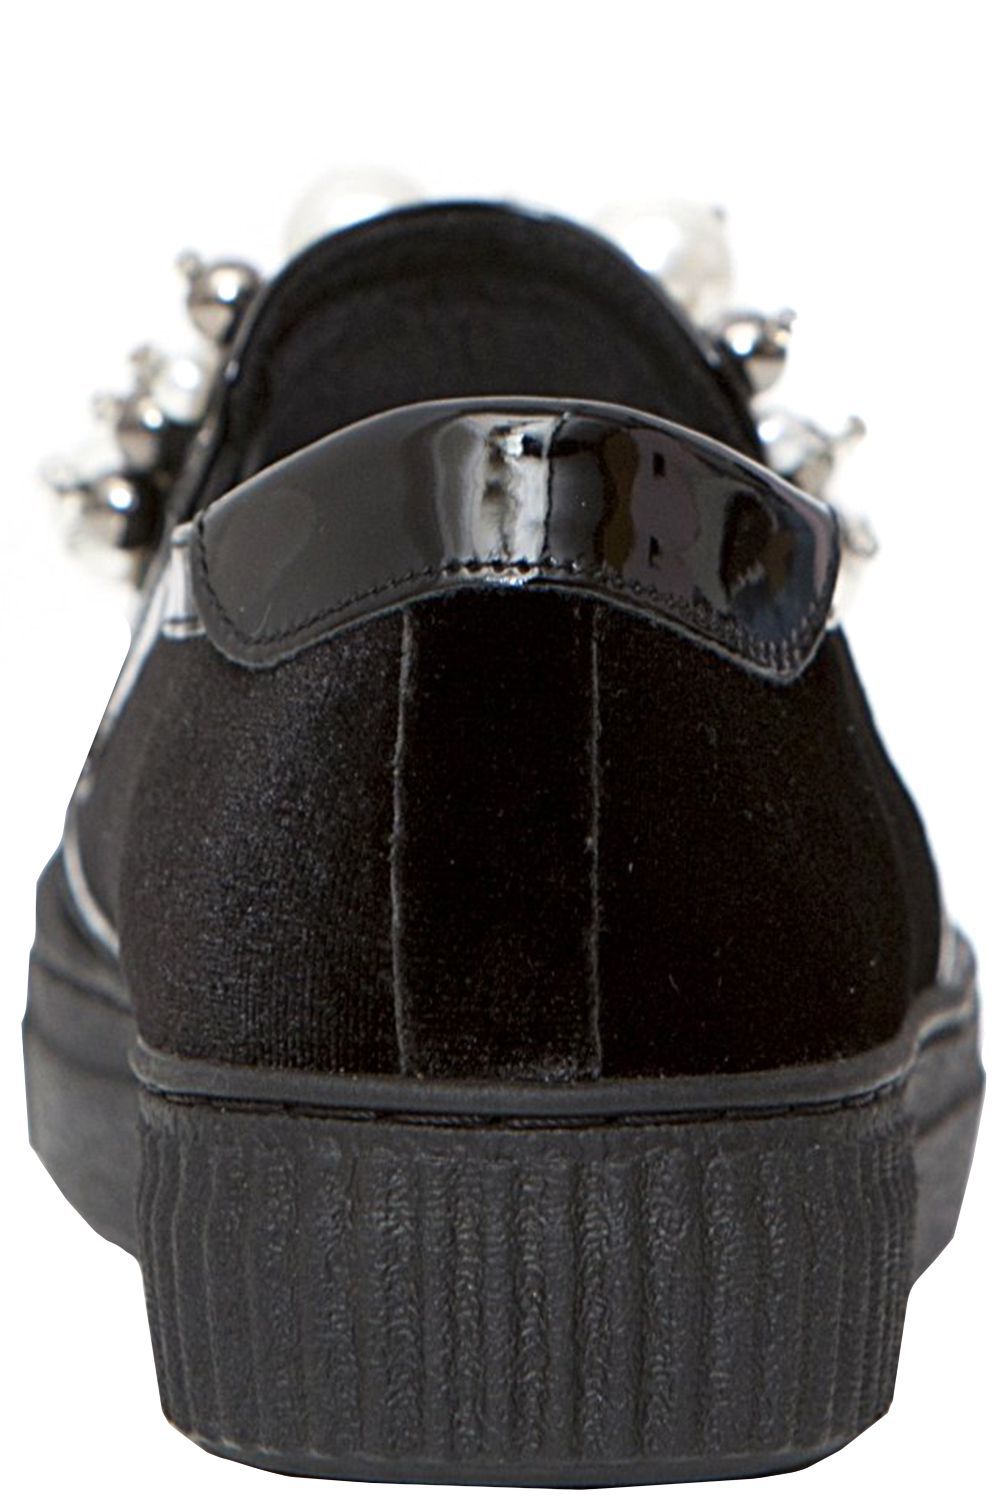 Ботинки Holala, размер 29, цвет черный HS0020T - фото 6